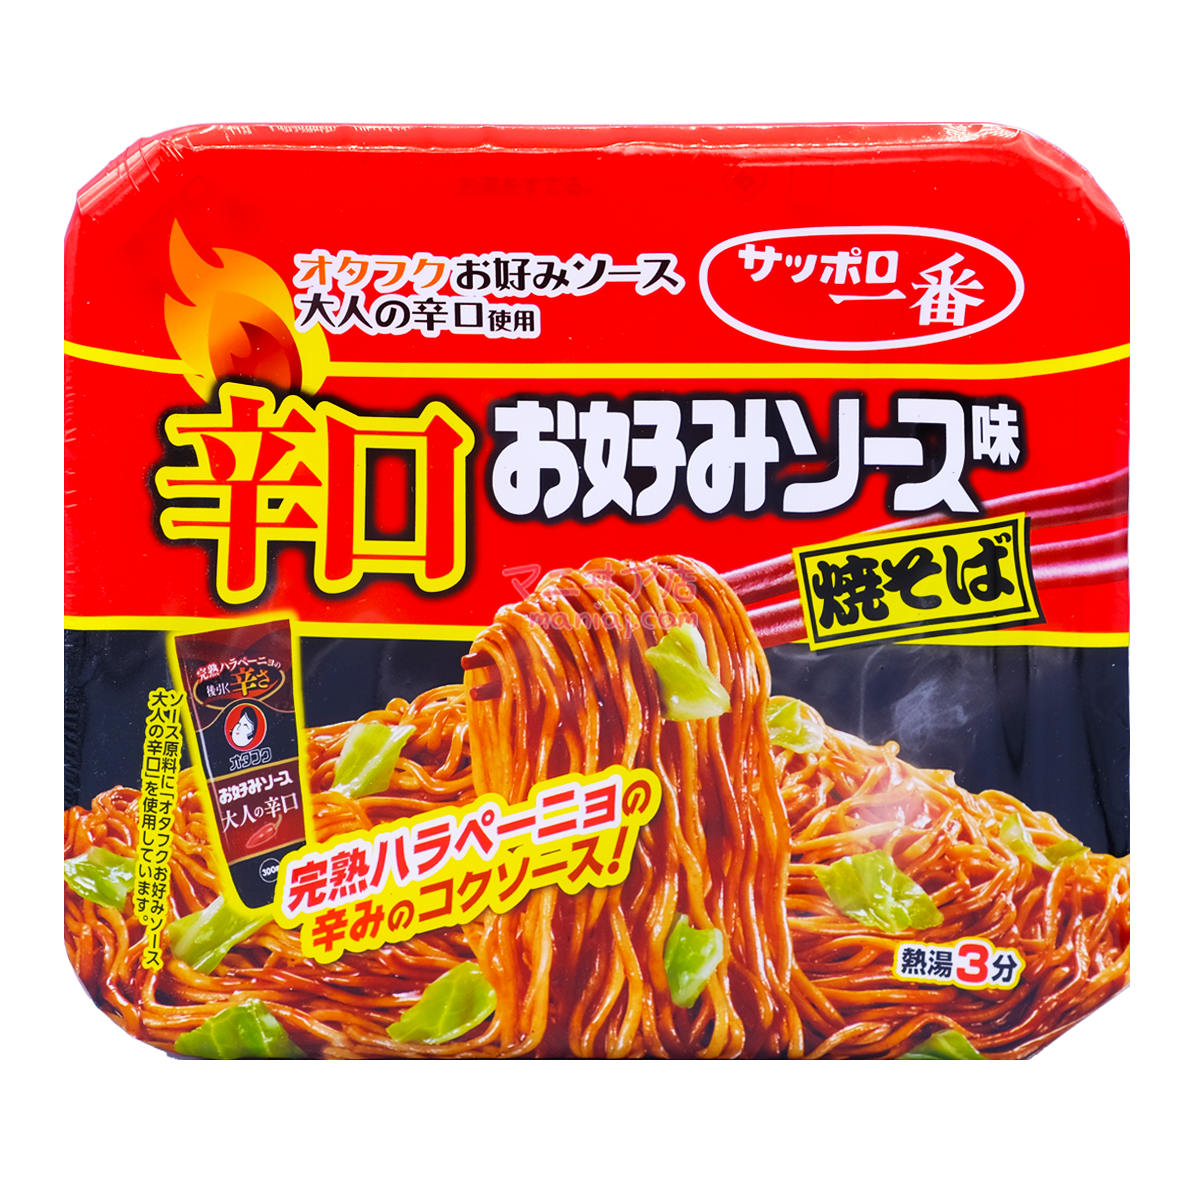 Otafuku spicy okonomiyaki sauce flavored lo mein